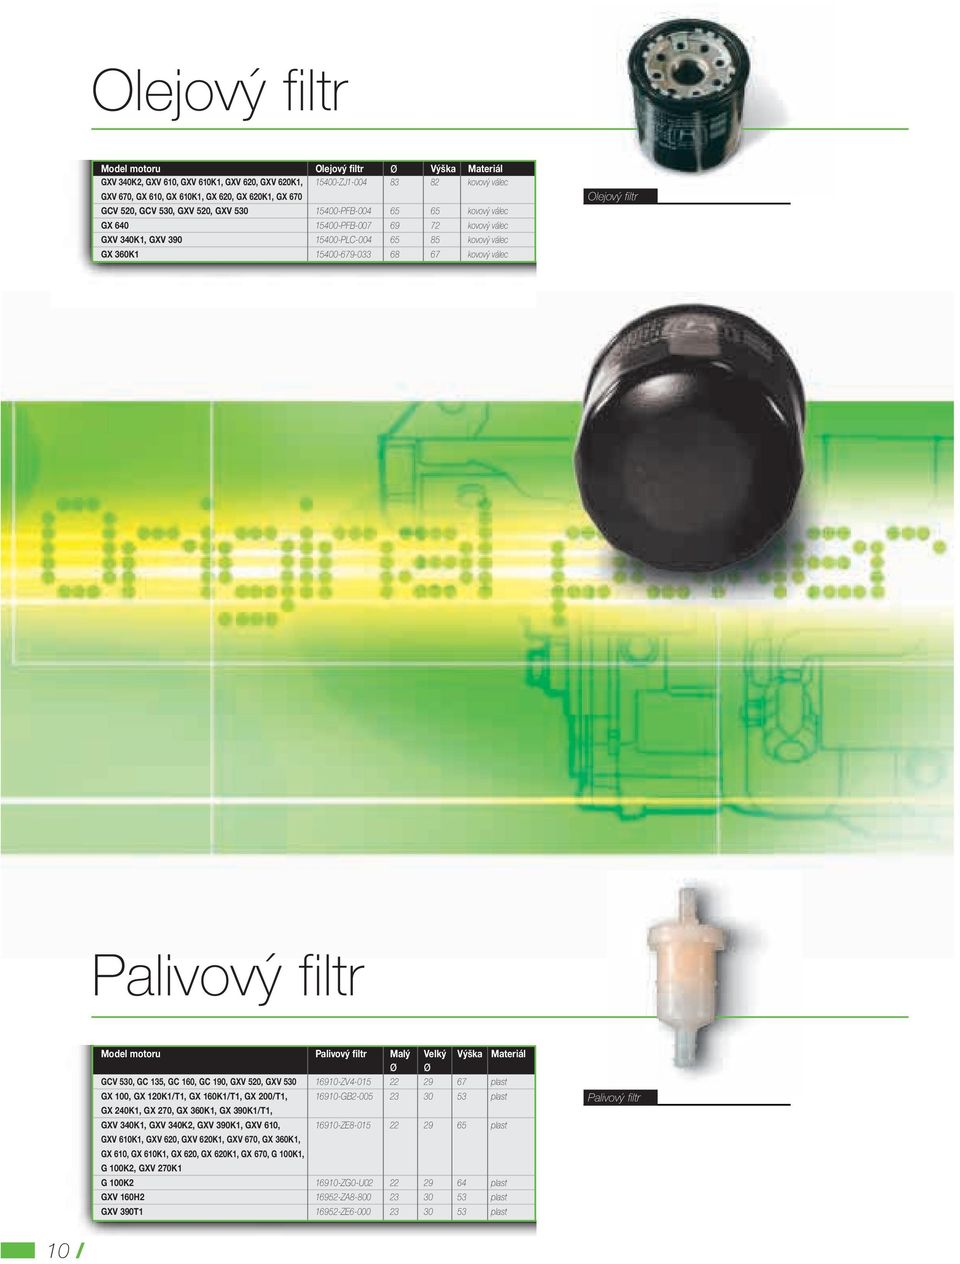 Palivový filtr Model motoru Palivový filtr Malý Velký Výška Materiál Ø Ø GCV 530, GC 35, GC 60, GC 90, GXV 520, GXV 530 690-ZV4-05 22 29 67 plast GX 00, GX 20K/T, GX 60K/T, GX 200/T, 690-GB2-005 23